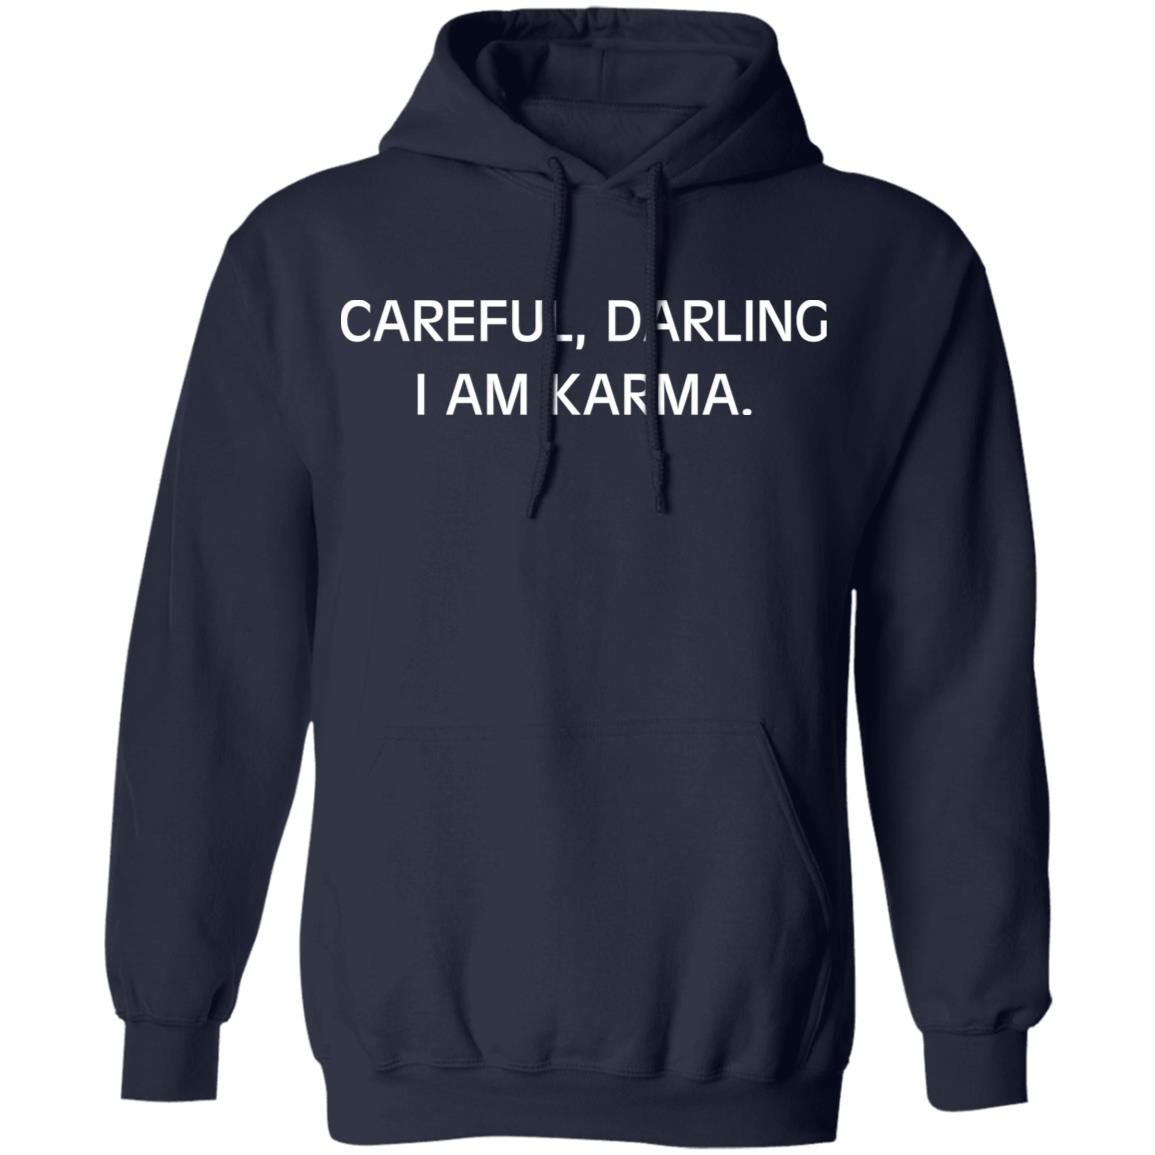 Careful darling I am karma shirt - Rockatee